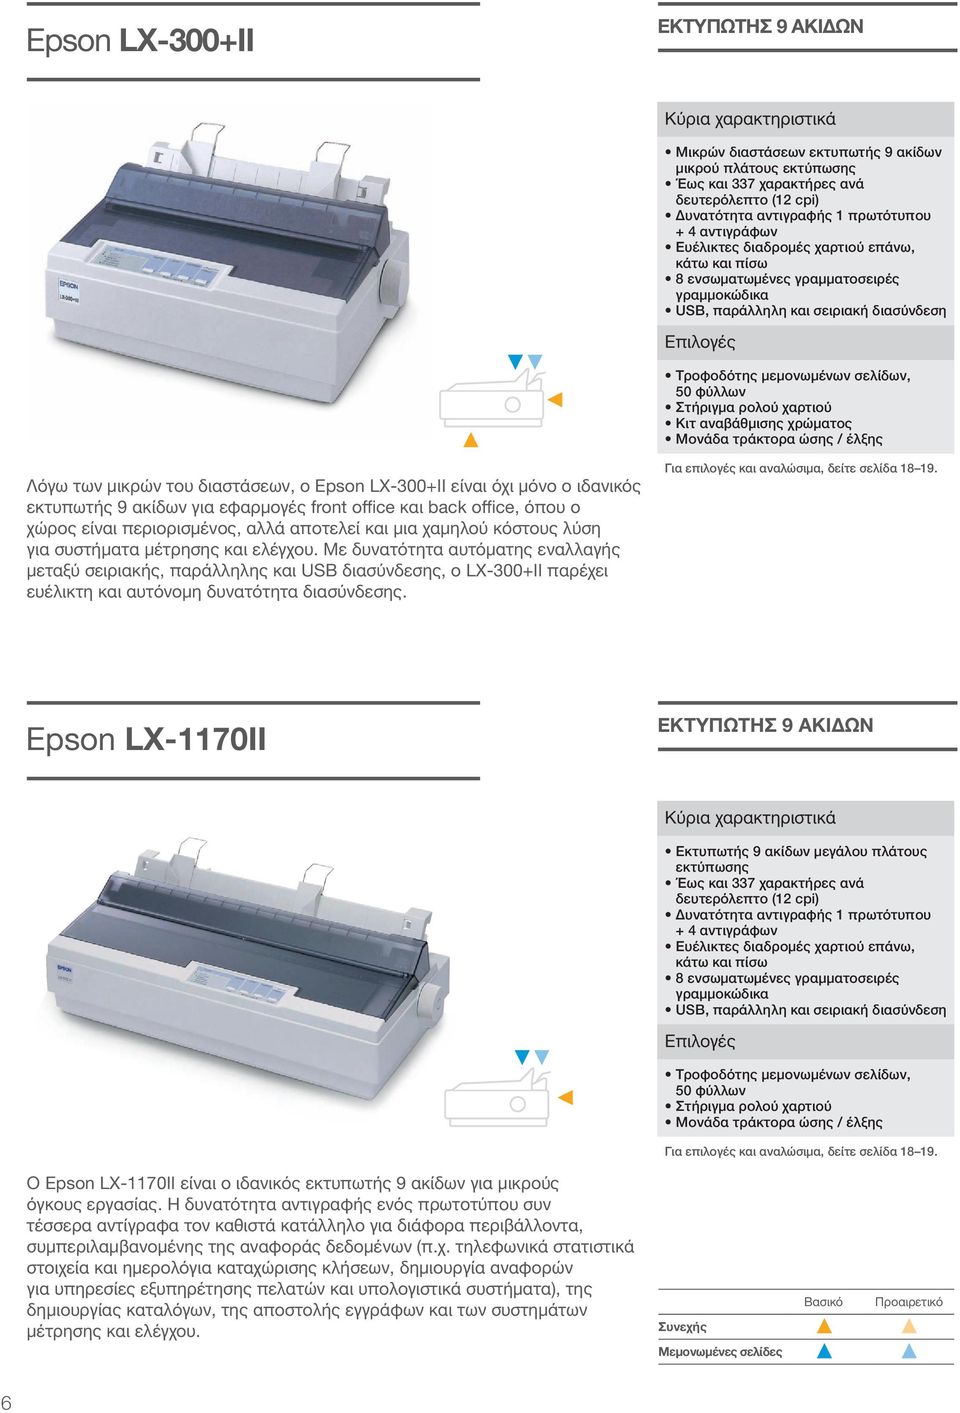 LX-300+II είναι όχι μόνο ο ιδανικός εκτυπωτής 9 ακίδων για εφαρμογές frot office και back office, όπου ο χώρος είναι περιορισμένος, αλλά αποτελεί και μια χαμηλού κόστους λύση για συστήματα μέτρησης